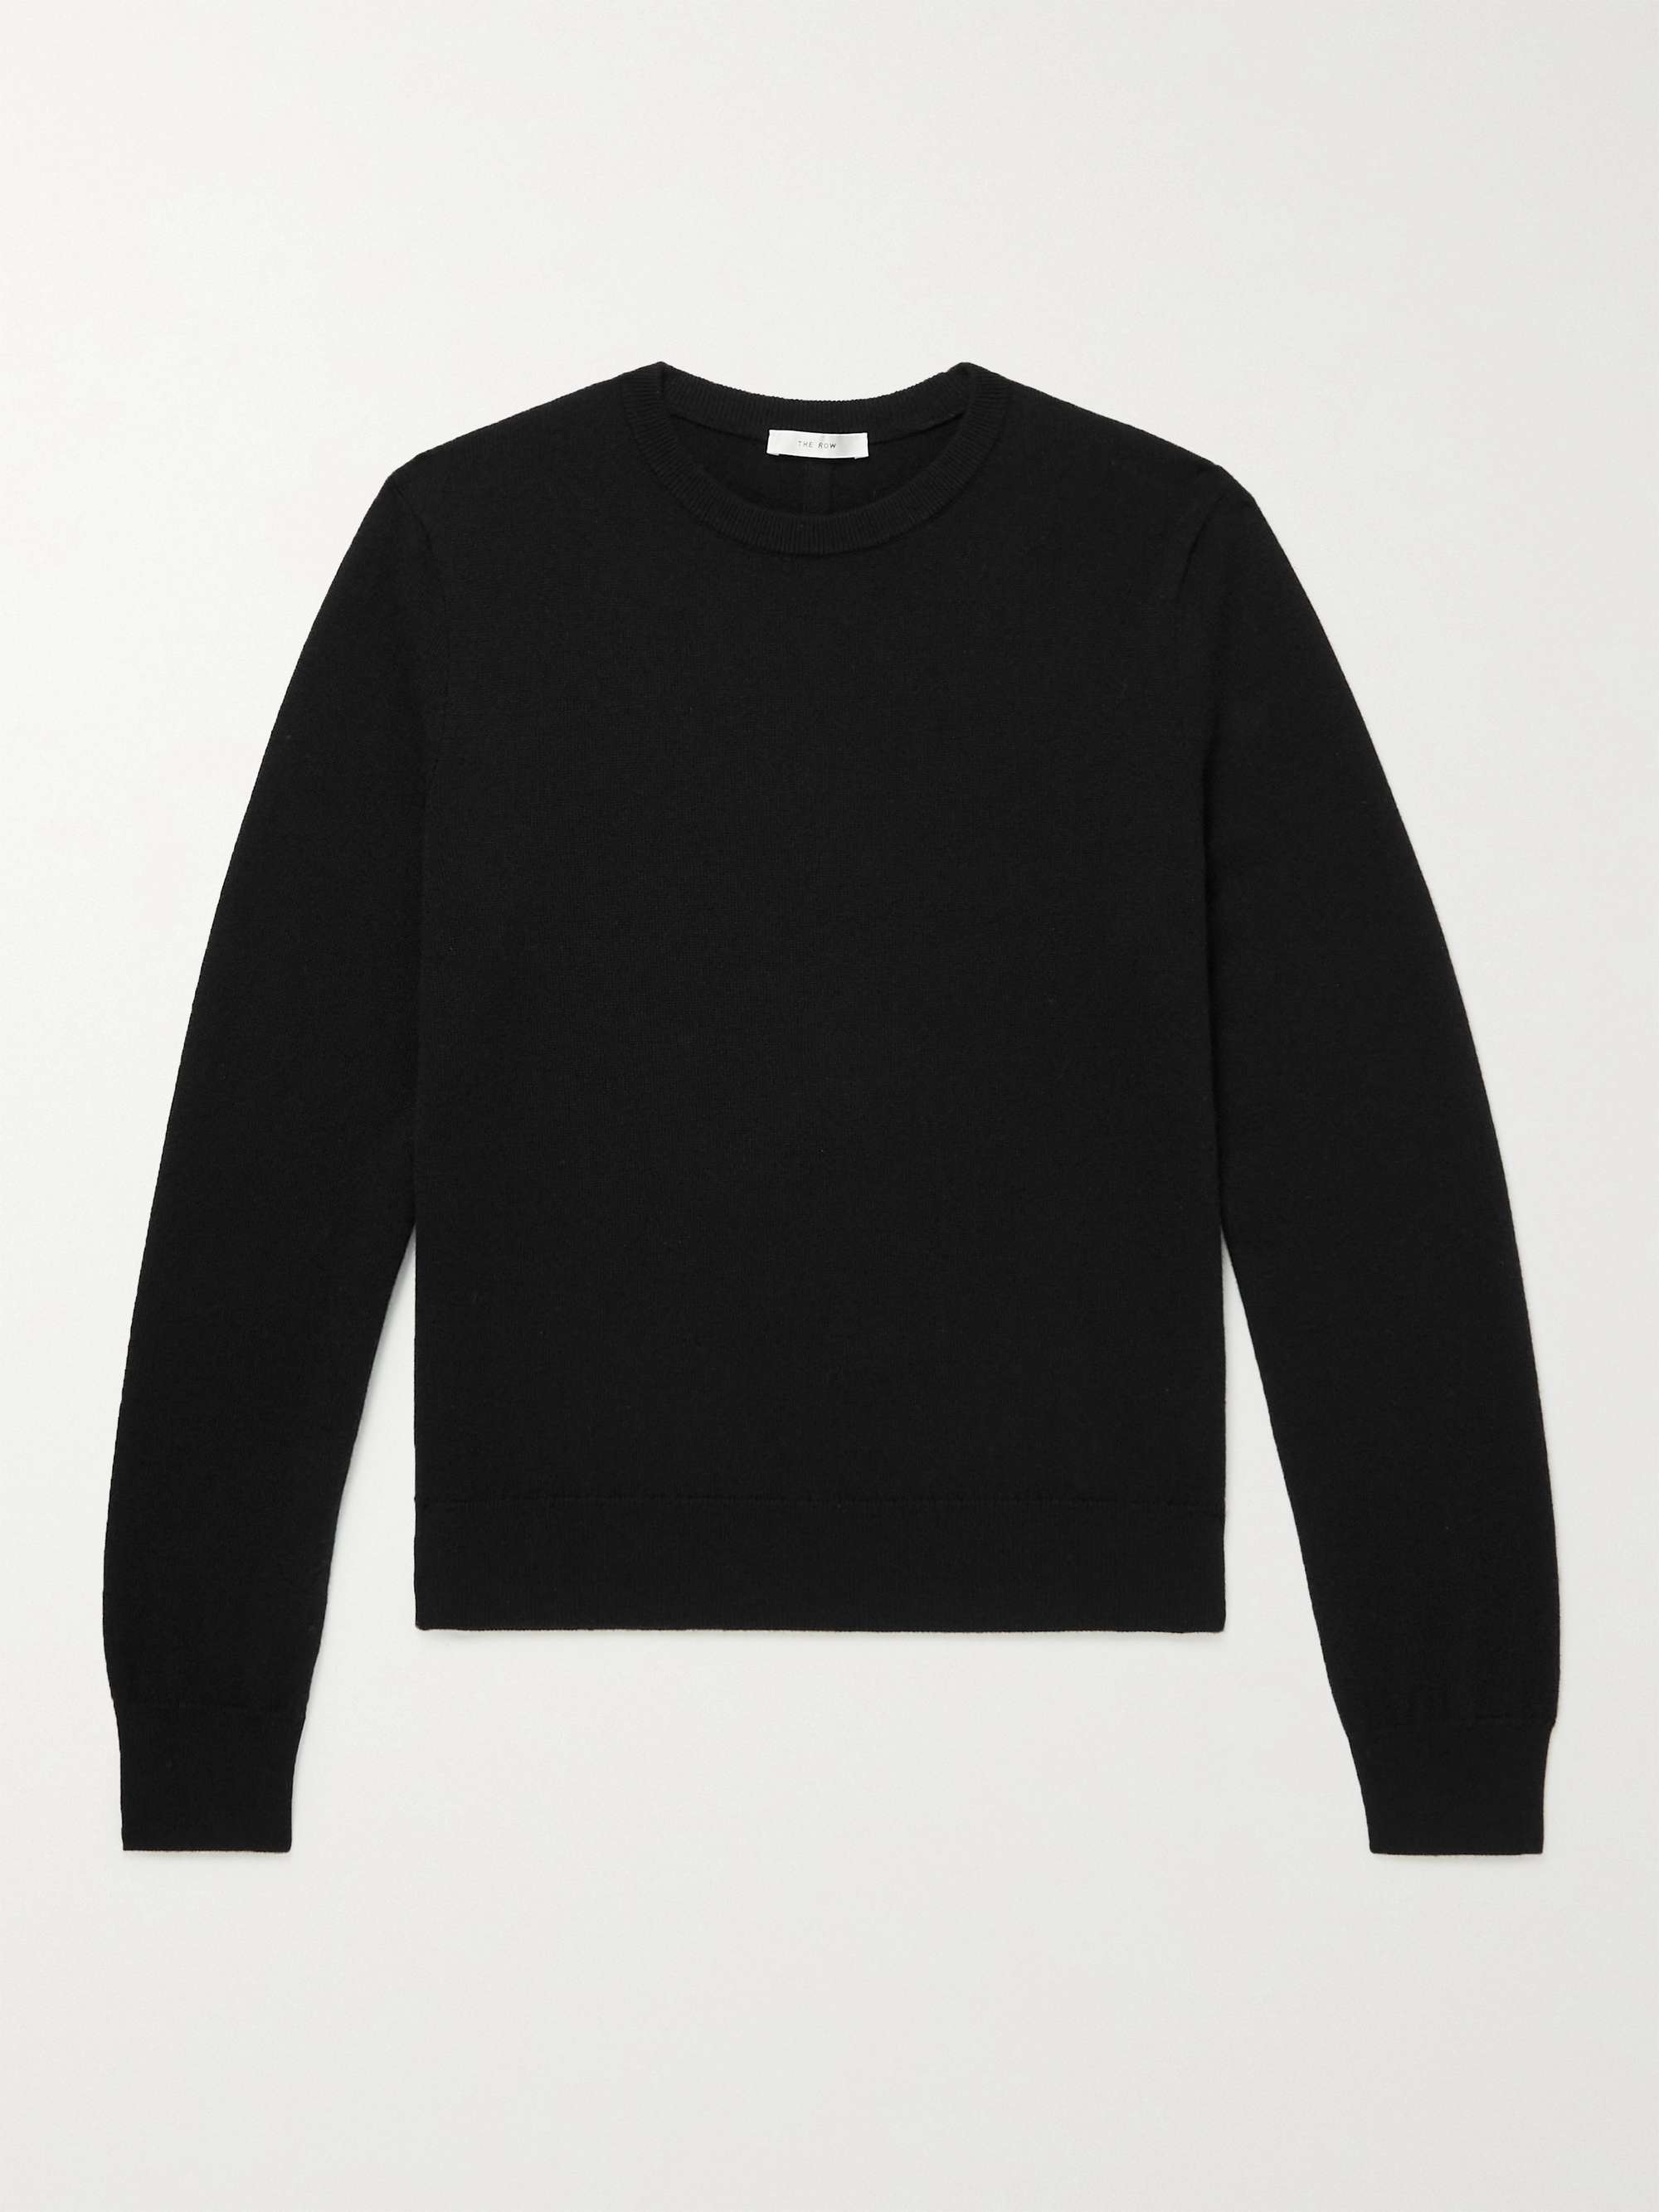 THE ROW Benji Cashmere Sweater